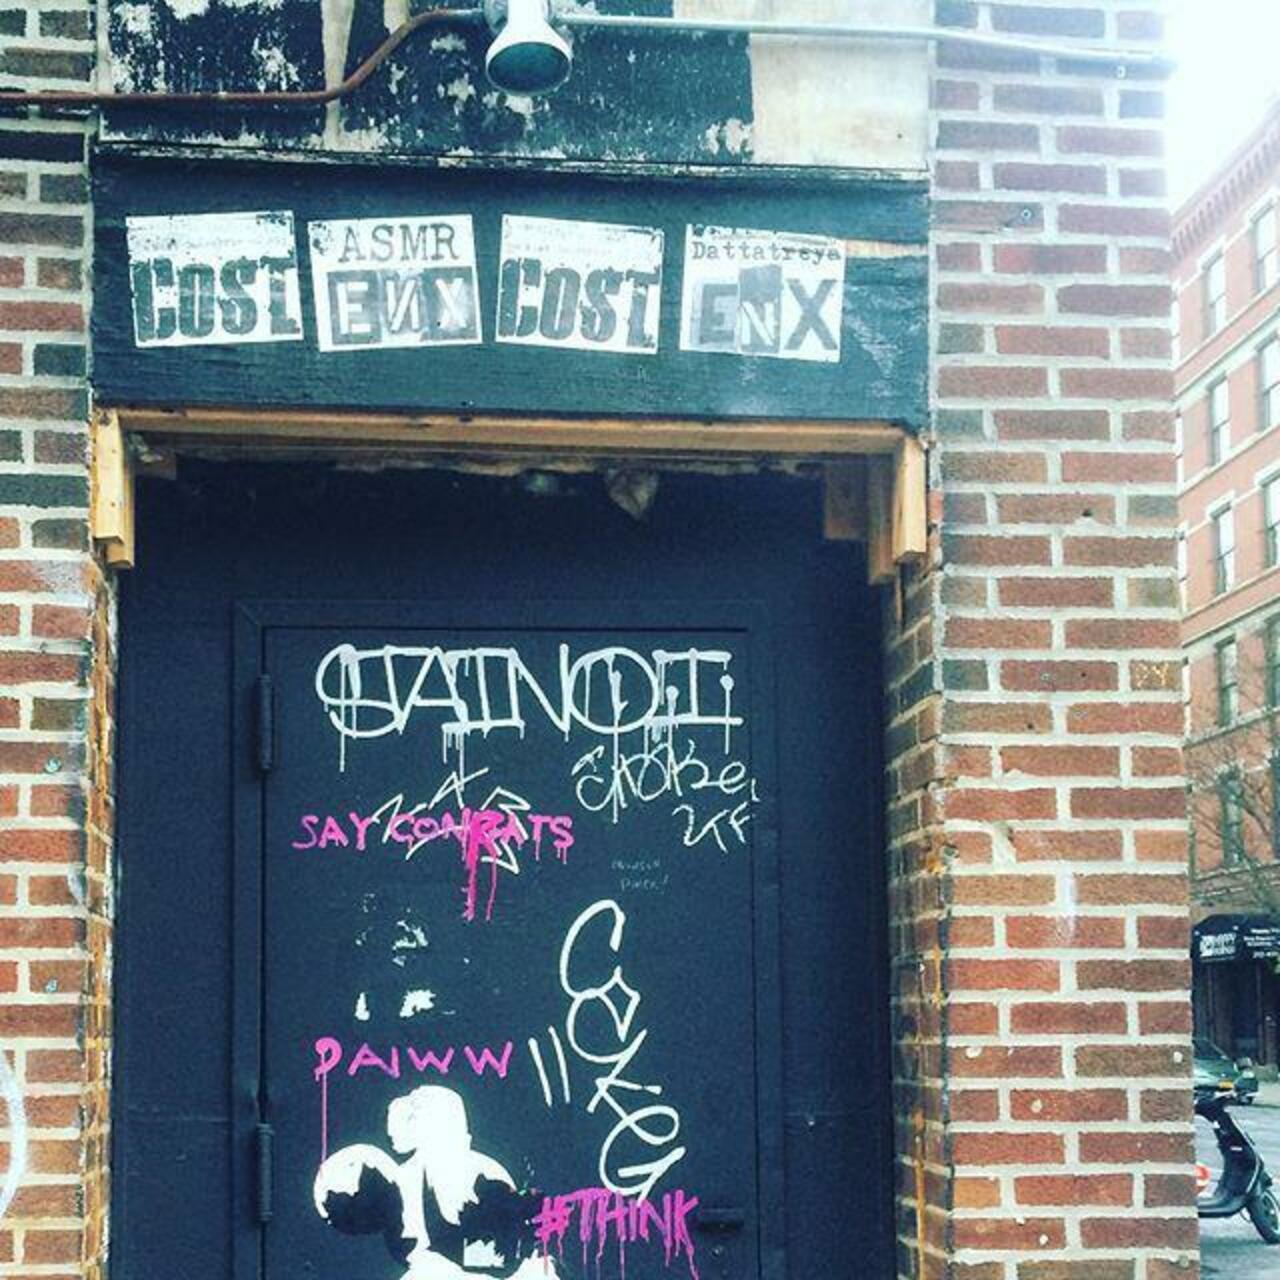 RT @StArtEverywhere: Shoot for the stars #newyorkcity #nyc #newyork #streetart #nycstreetart #graffiti #nycgraffiti #staino #cost #enx #… http://t.co/LrDPpxD8zl